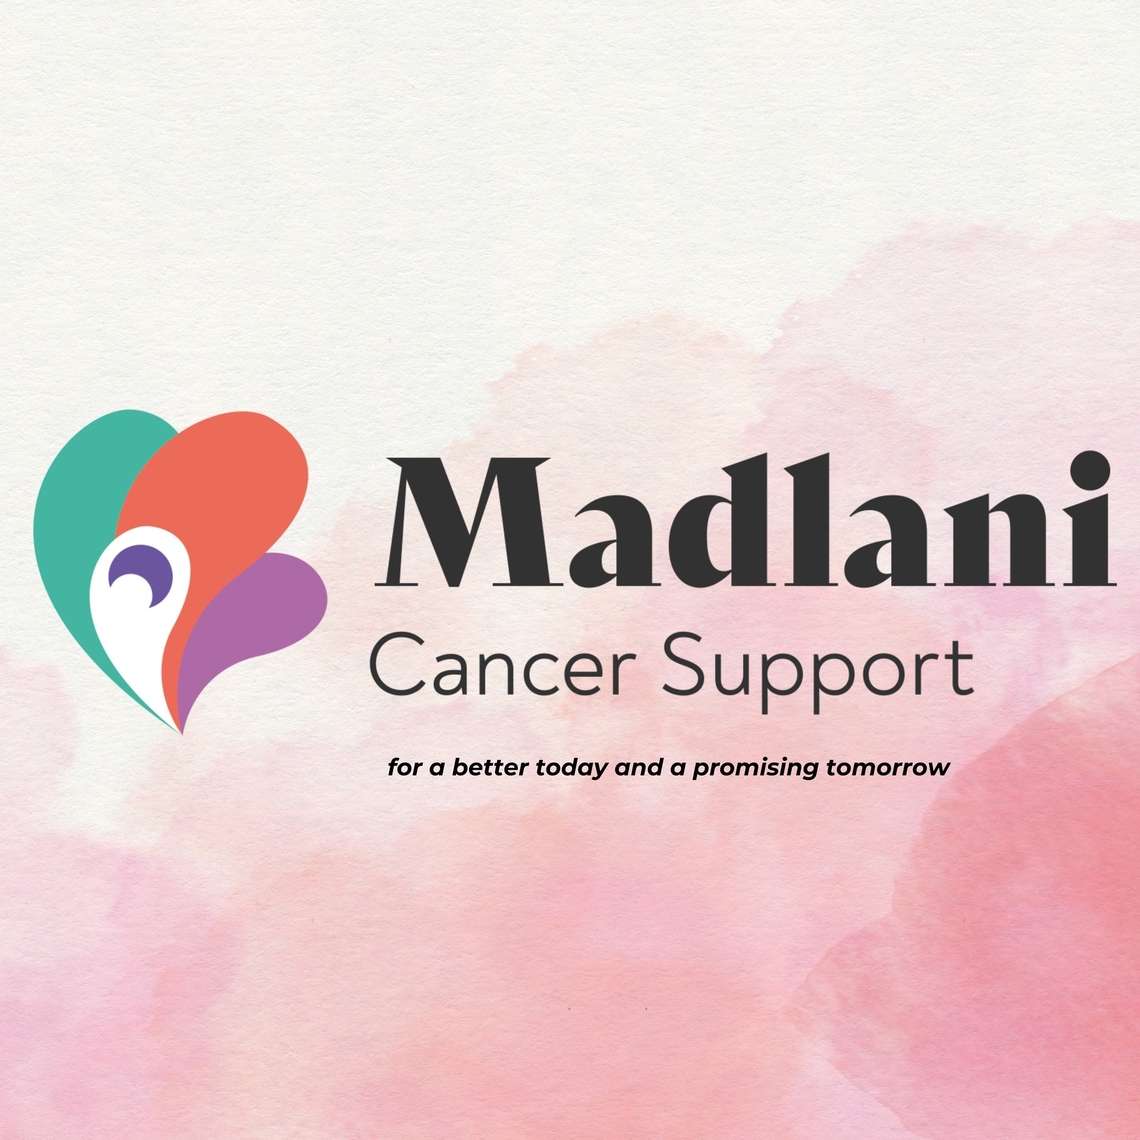 Madlani Cancer support logo